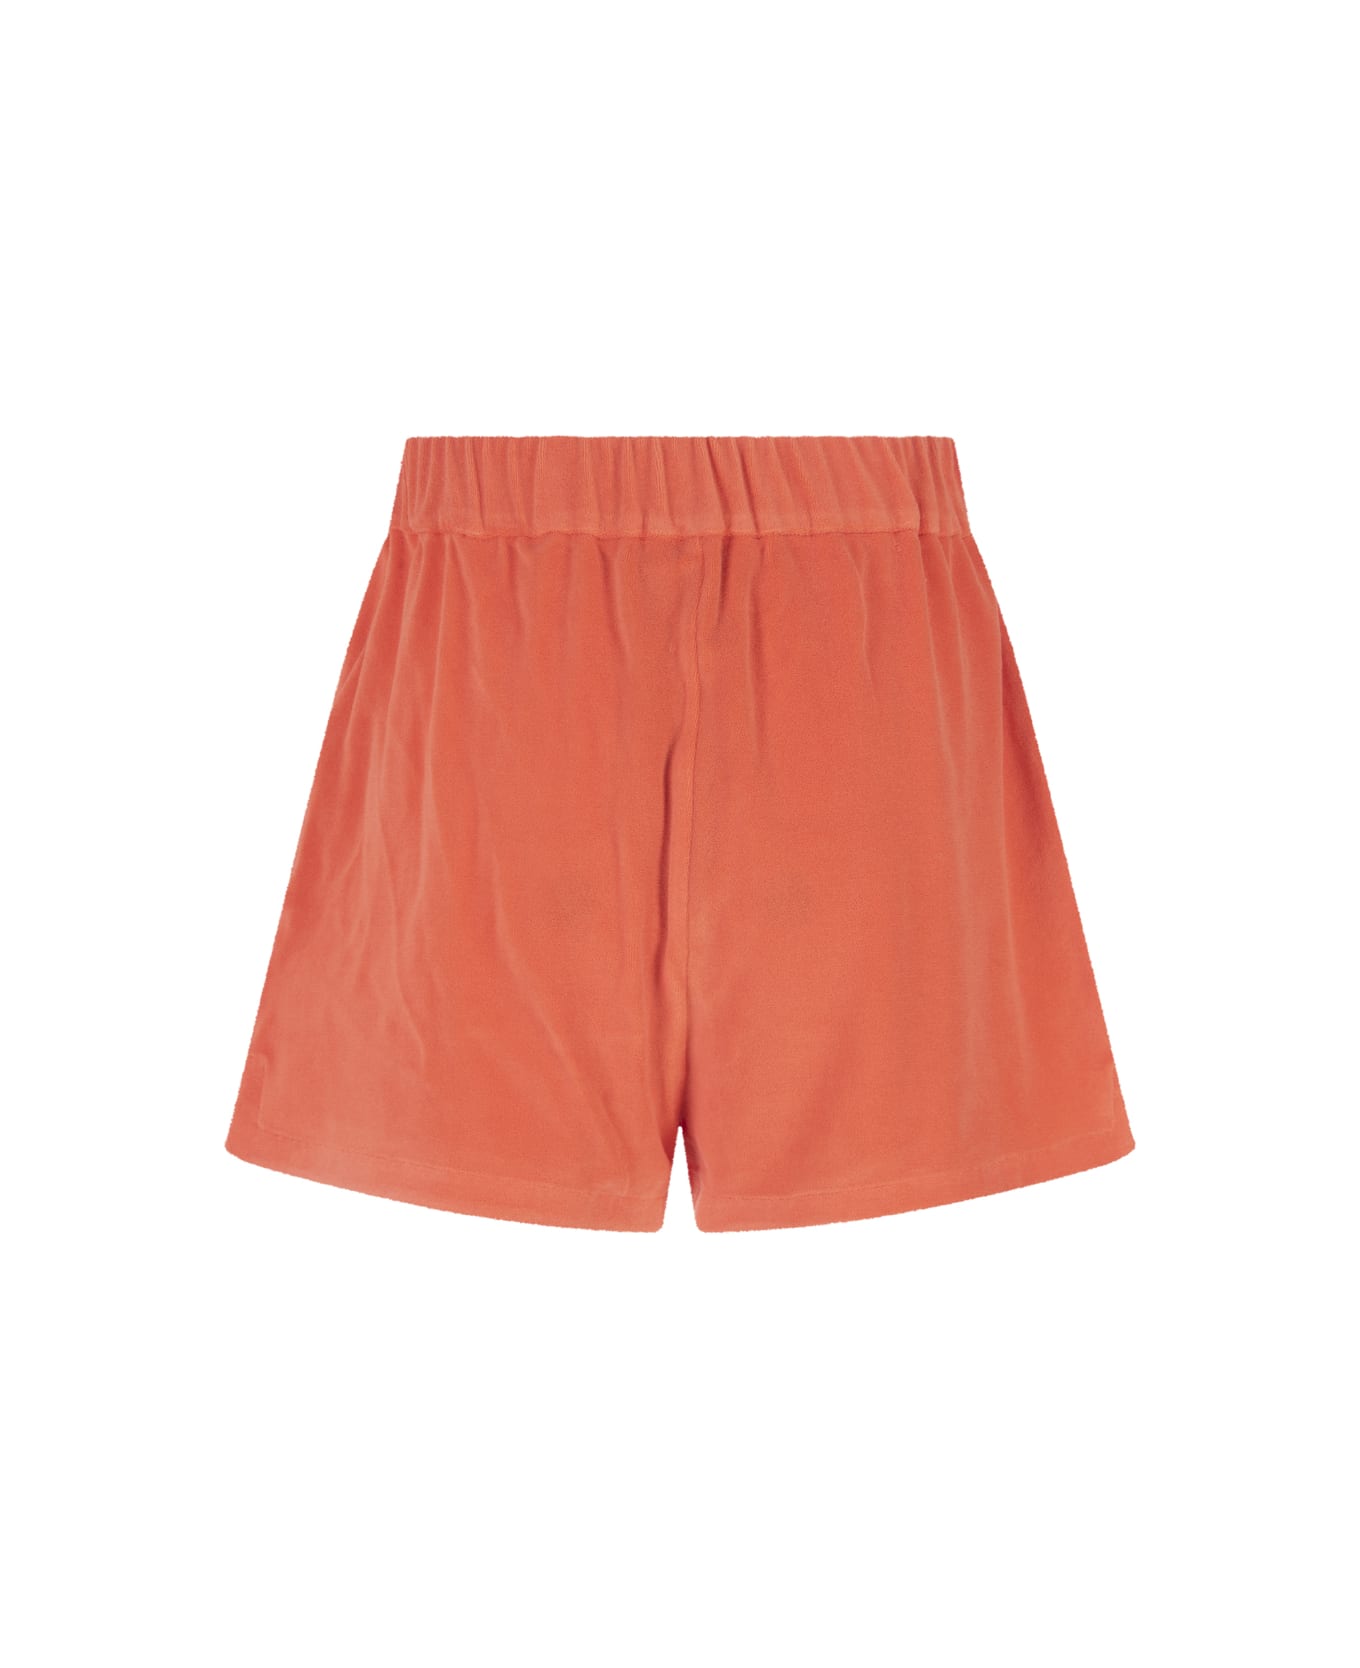 Moncler Orange Terry Shorts - Arancione